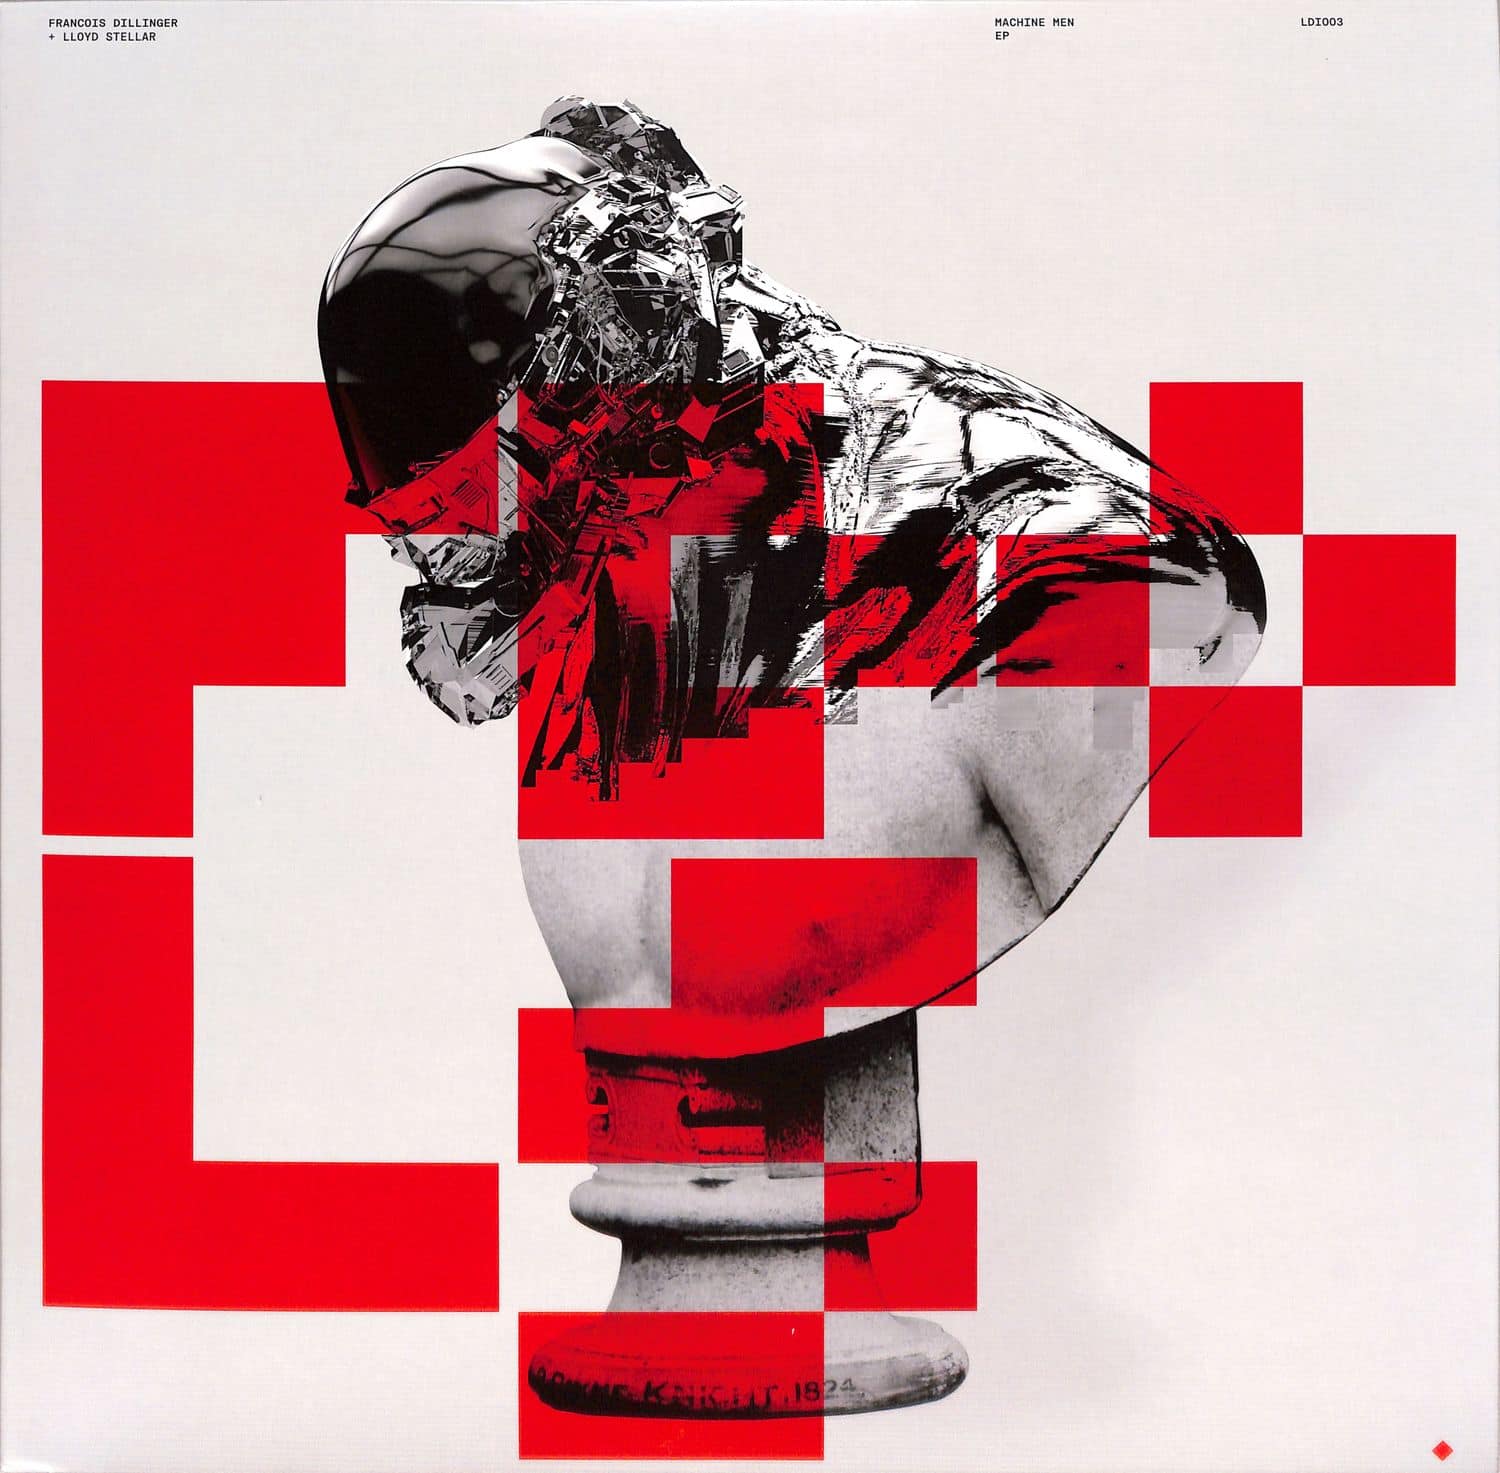 Francois Dillinger + Lloyd Stellar - MACHINE MEN EP